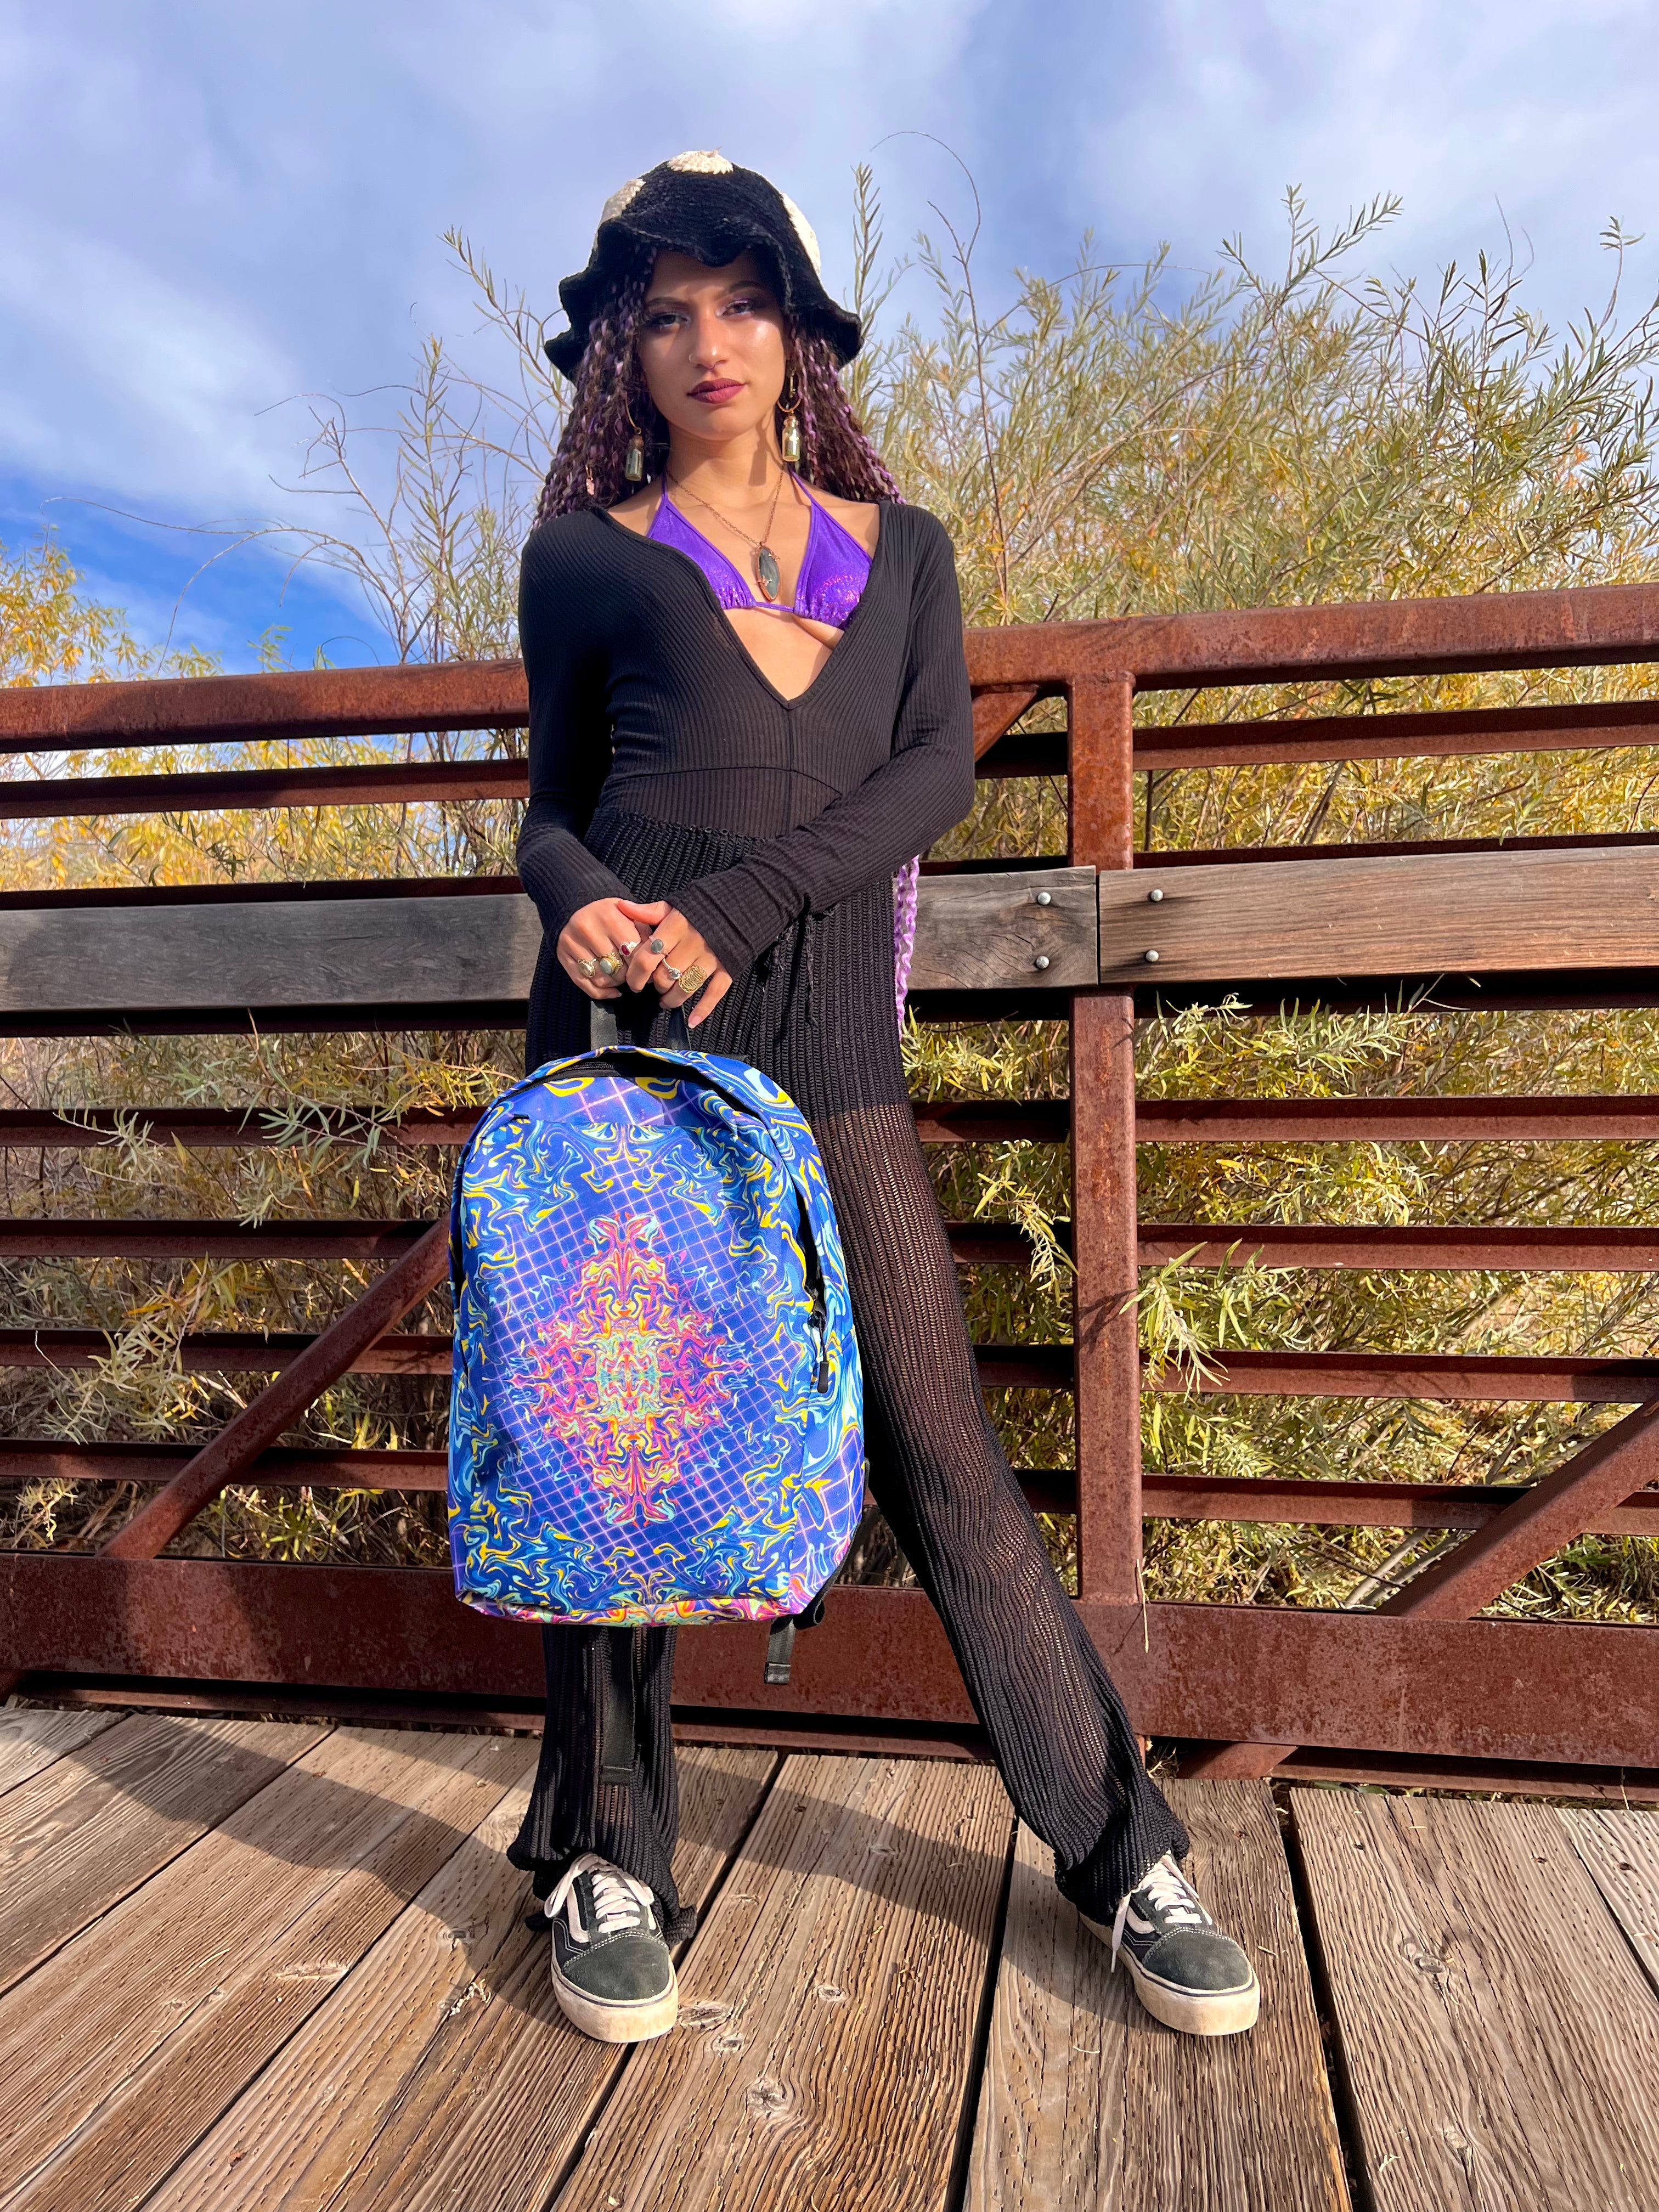 Nebula Backpack